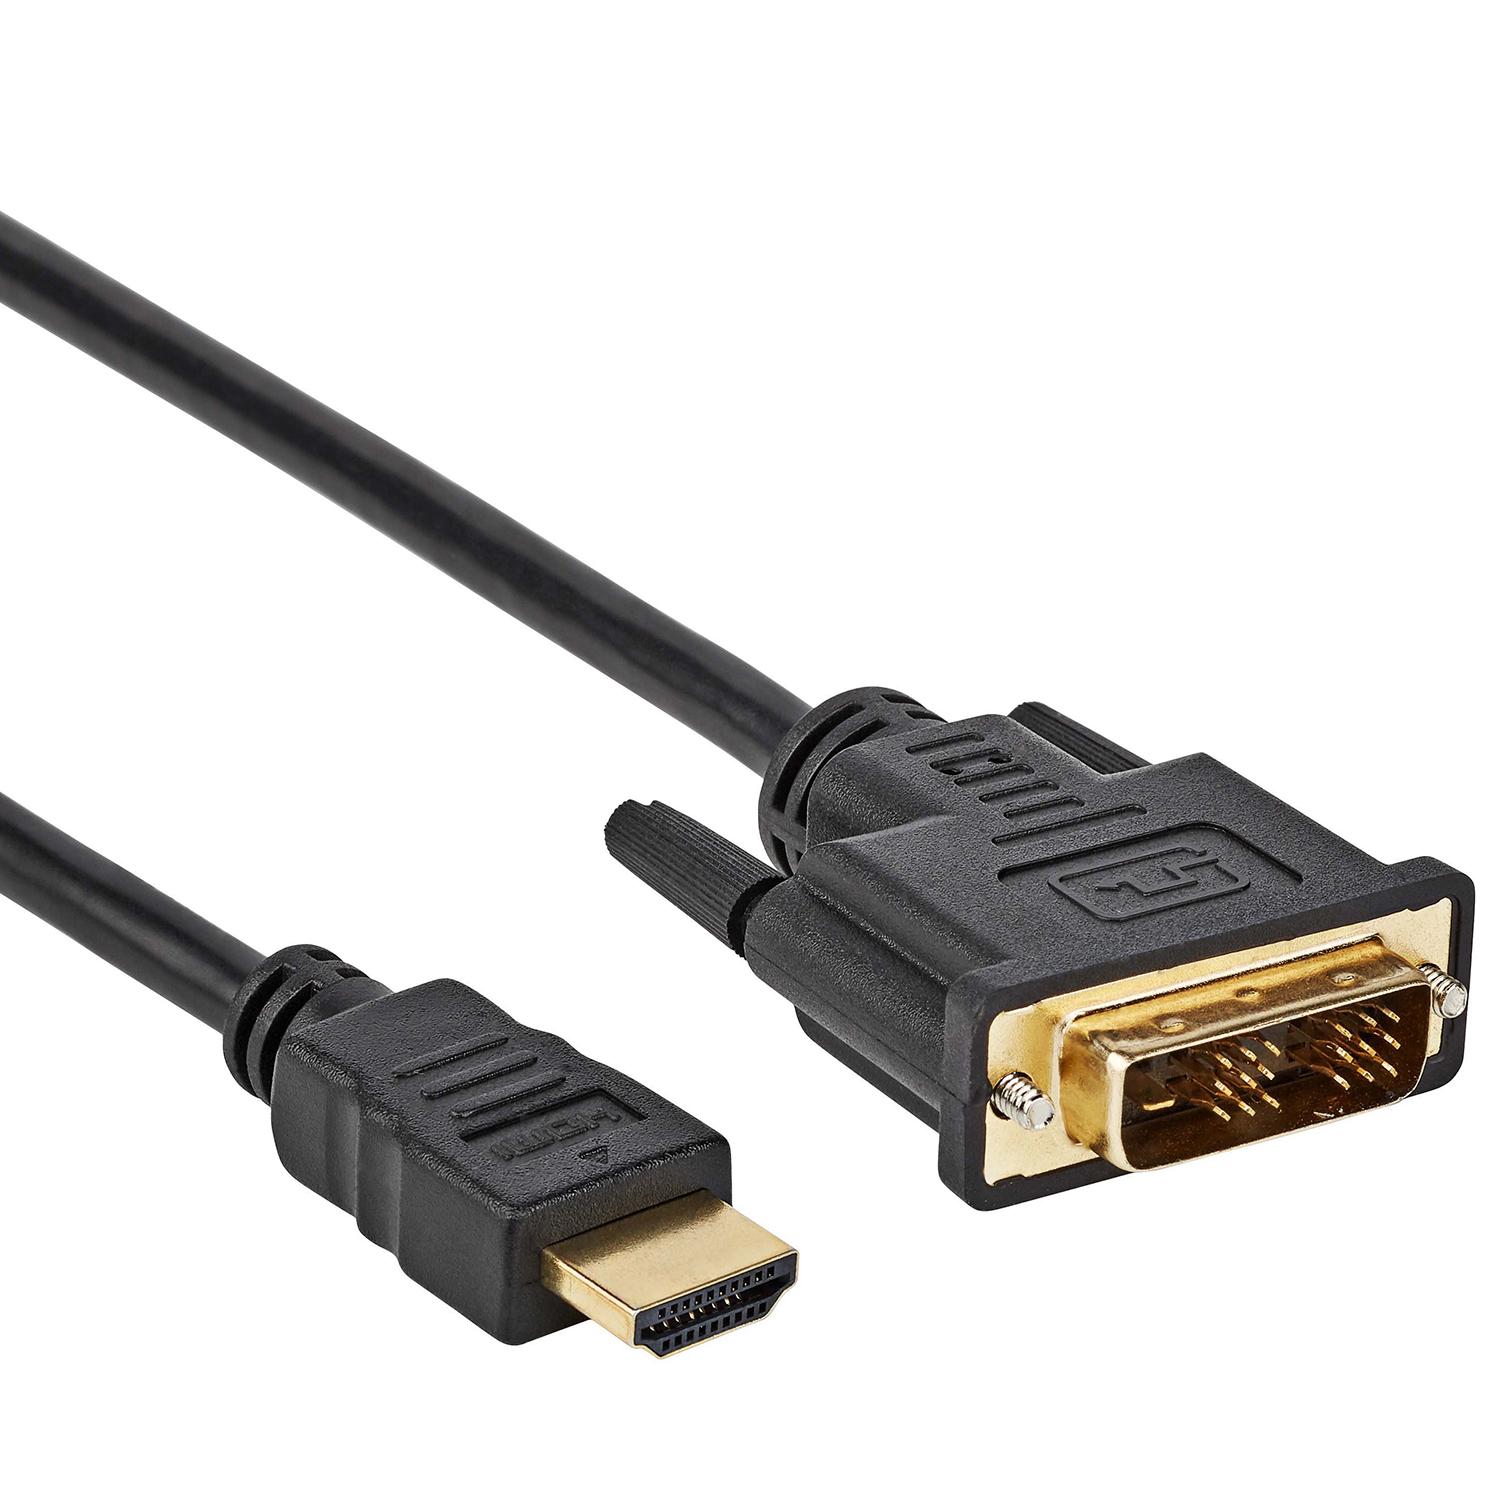 HDMI - DVI kabel - 0.5 meter - Allteq